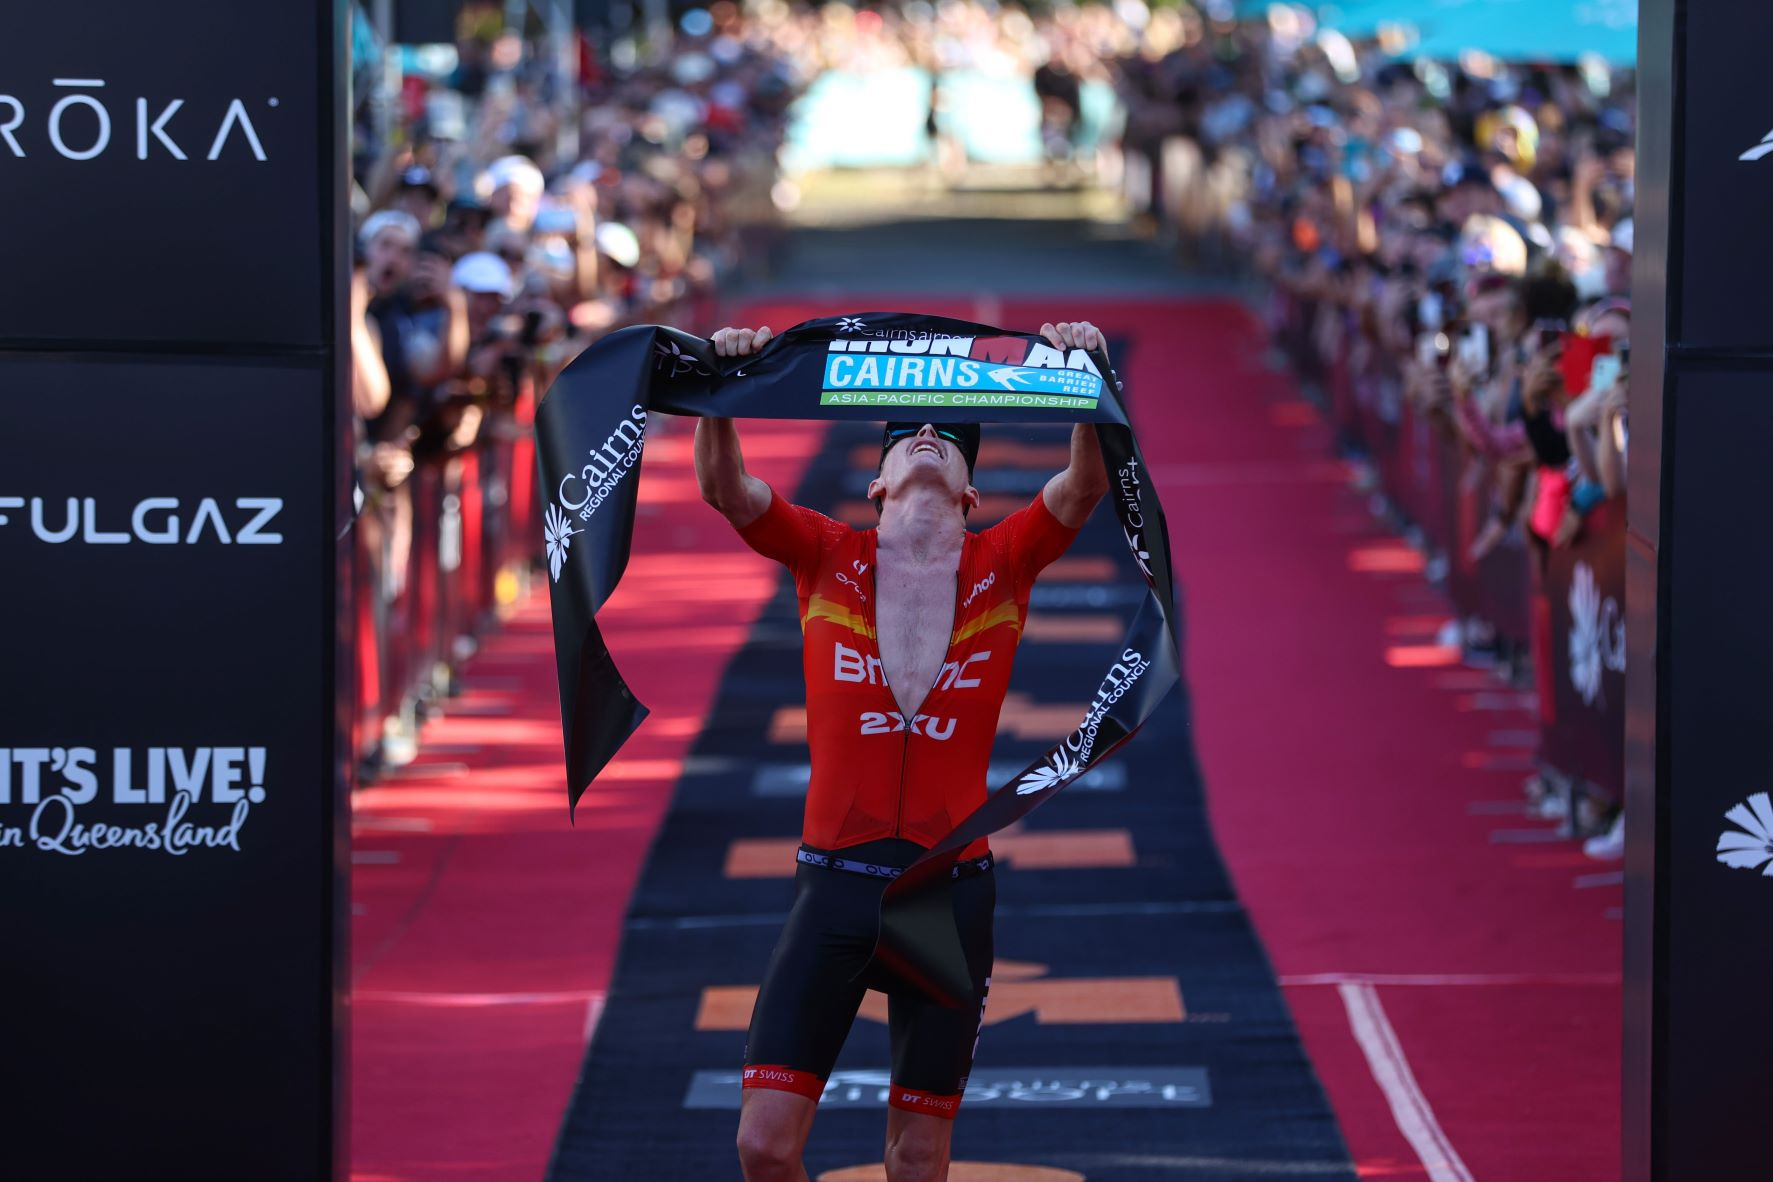 3 x Ironman Cairns Champion Max Neumann Describes 'Goosebumps' On The Home Stretch